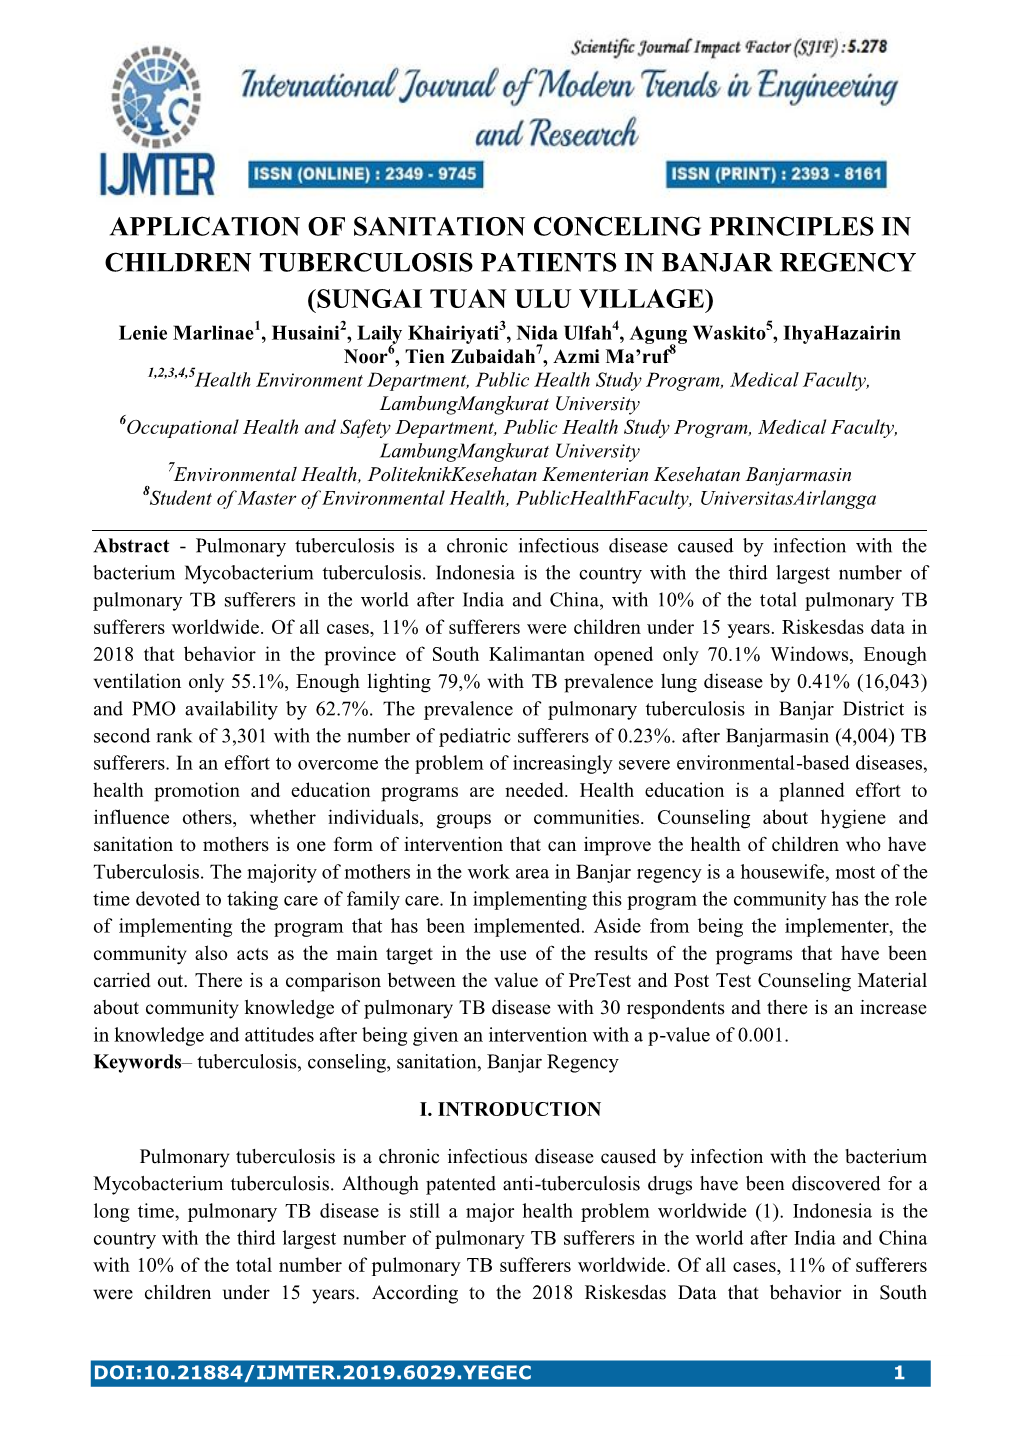 Application of Sanitation Conceling Principles in Children Tuberculosis Patients in Banjar Regency (Sungai Tuan Ulu Village)